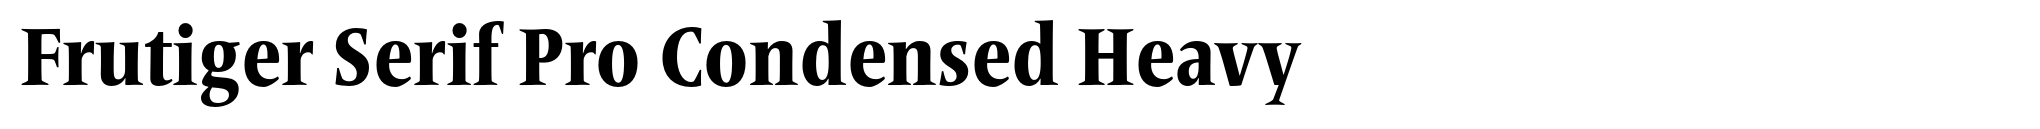 Frutiger Serif Pro Condensed Heavy image